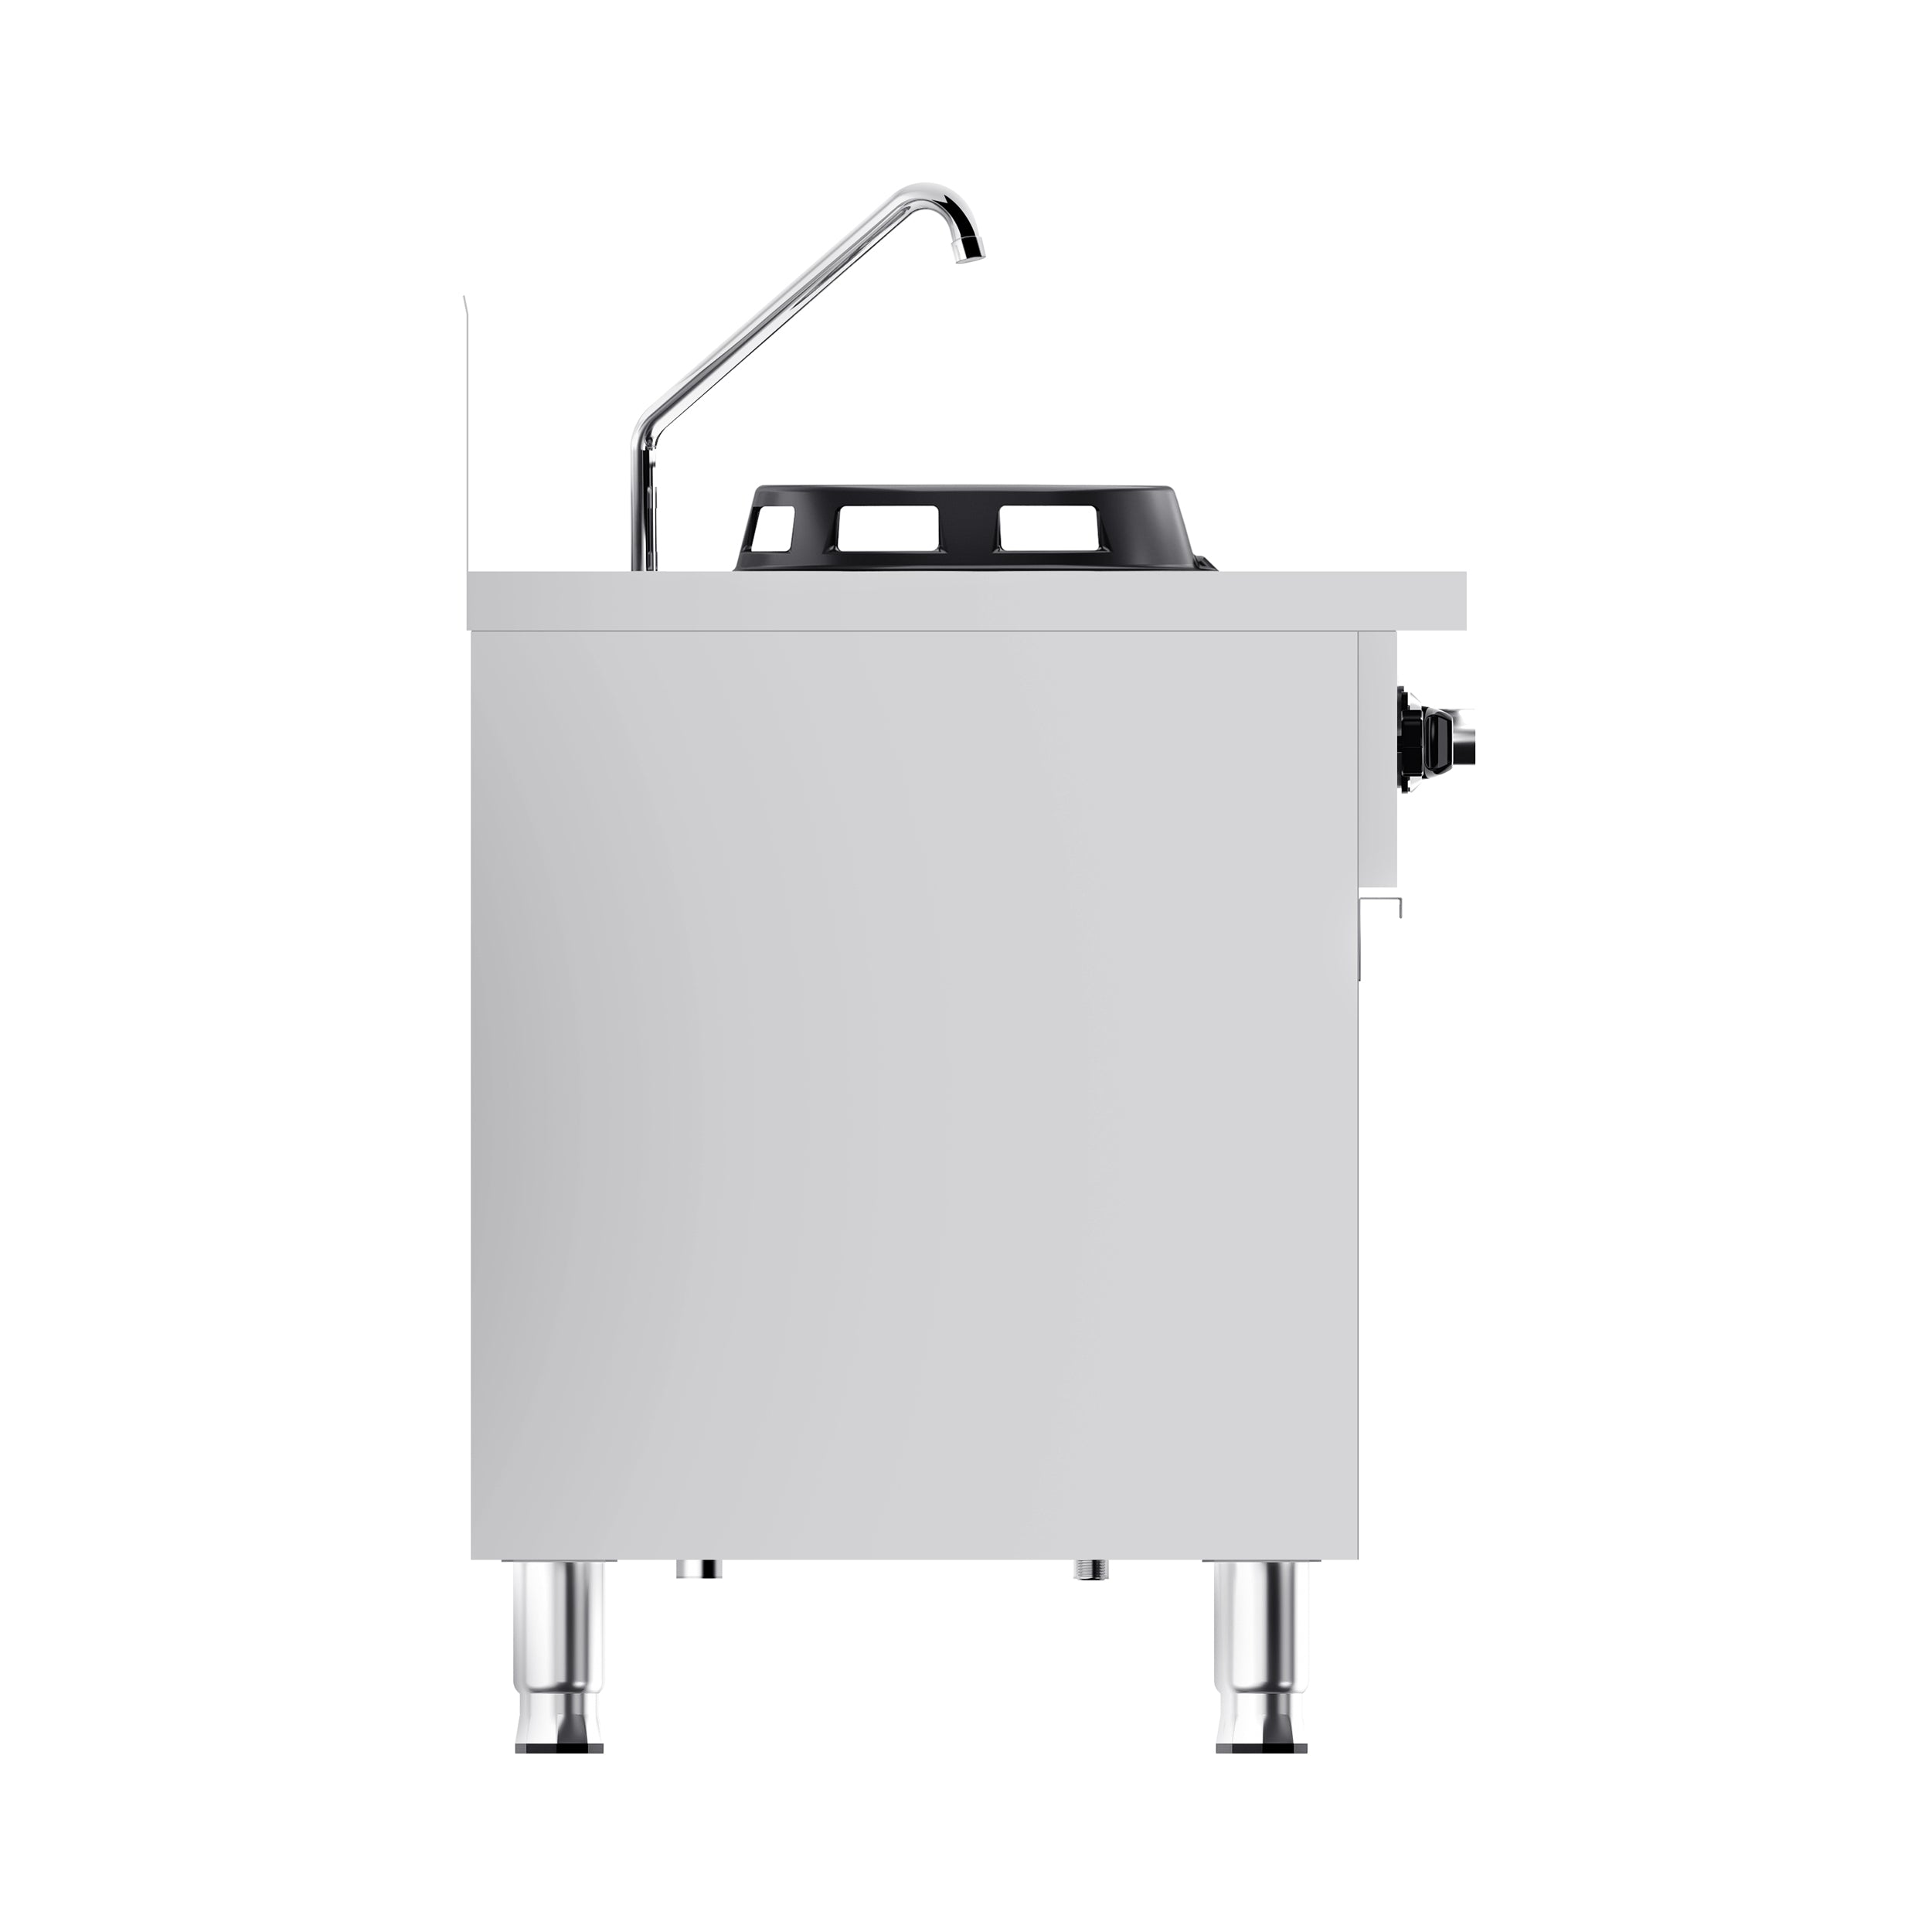 Gass wok komfyr - med 1 brenner - 15 kW